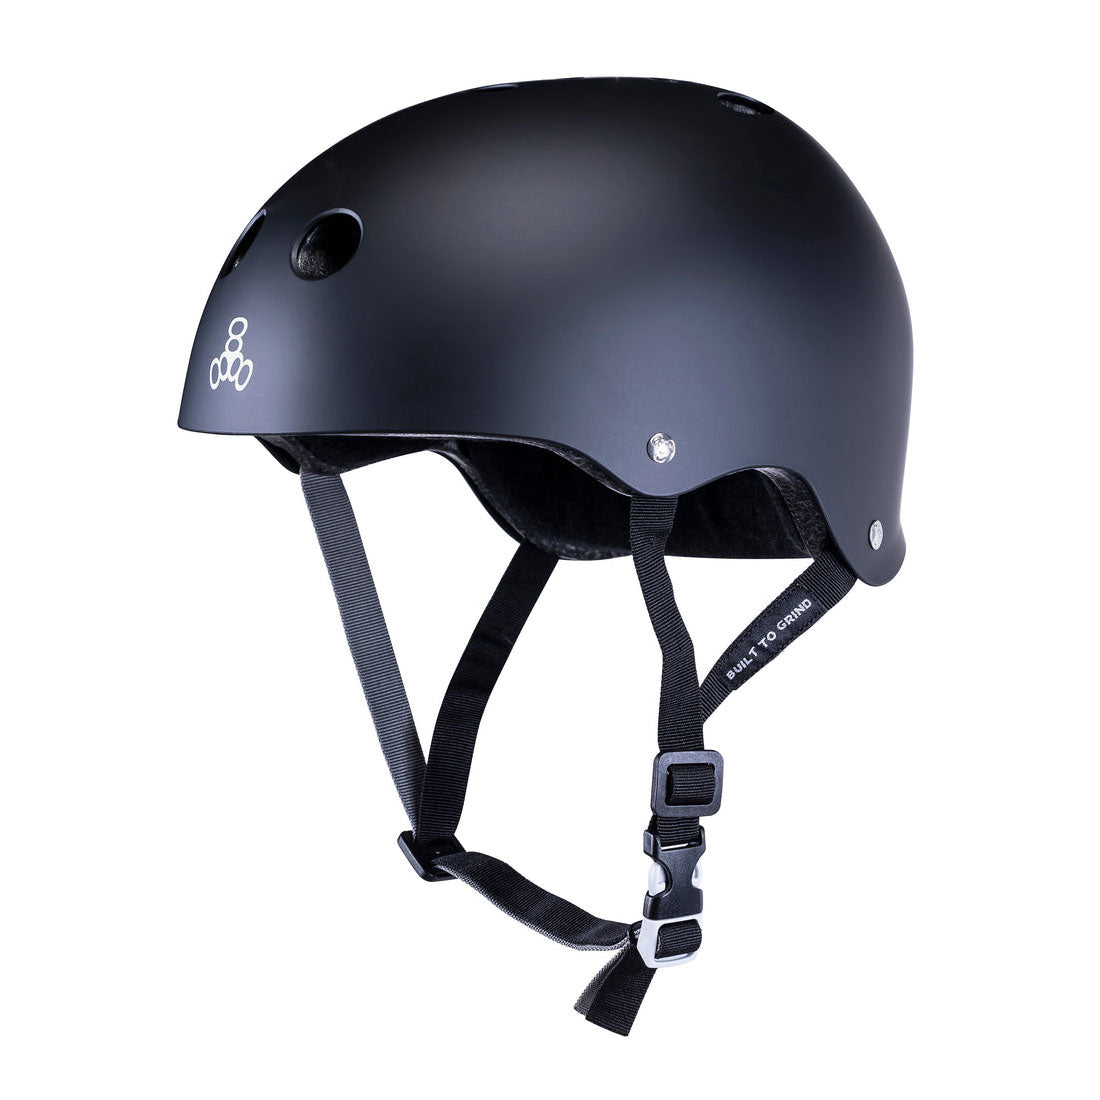 Triple 8 THE Cert SS Helmet - Independent Black Helmets